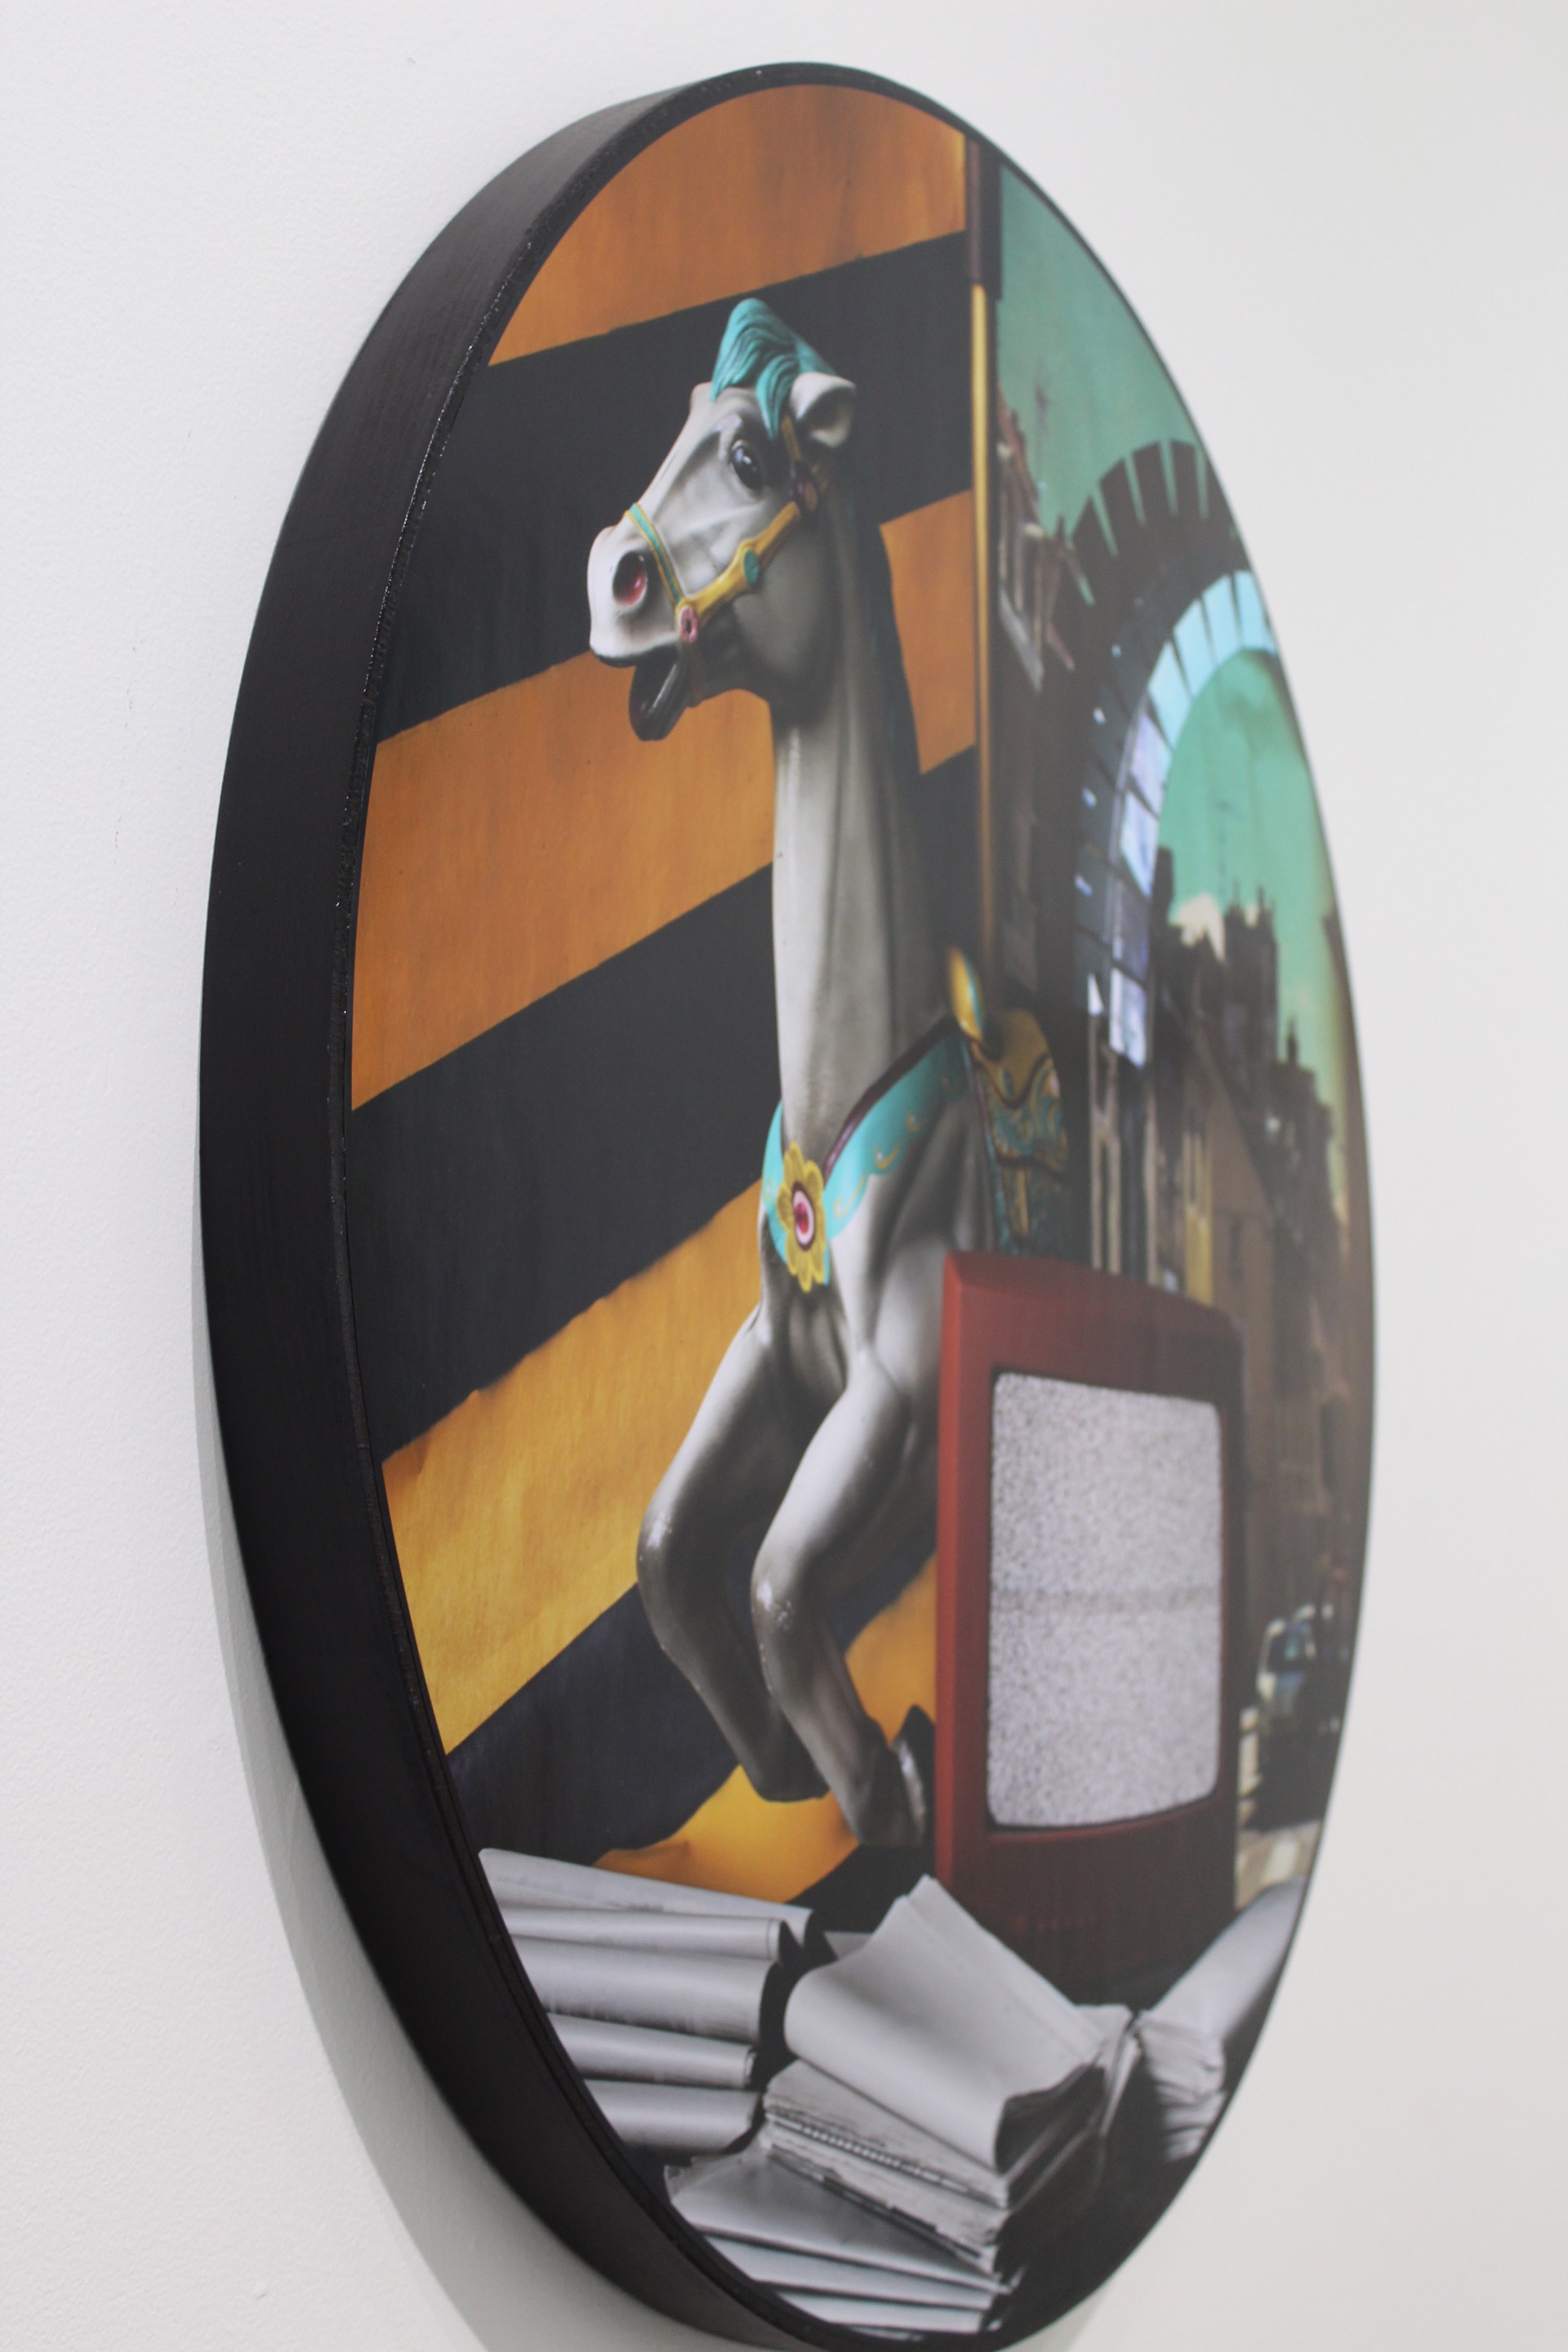 Carousel Horse with TV by Matt Morris